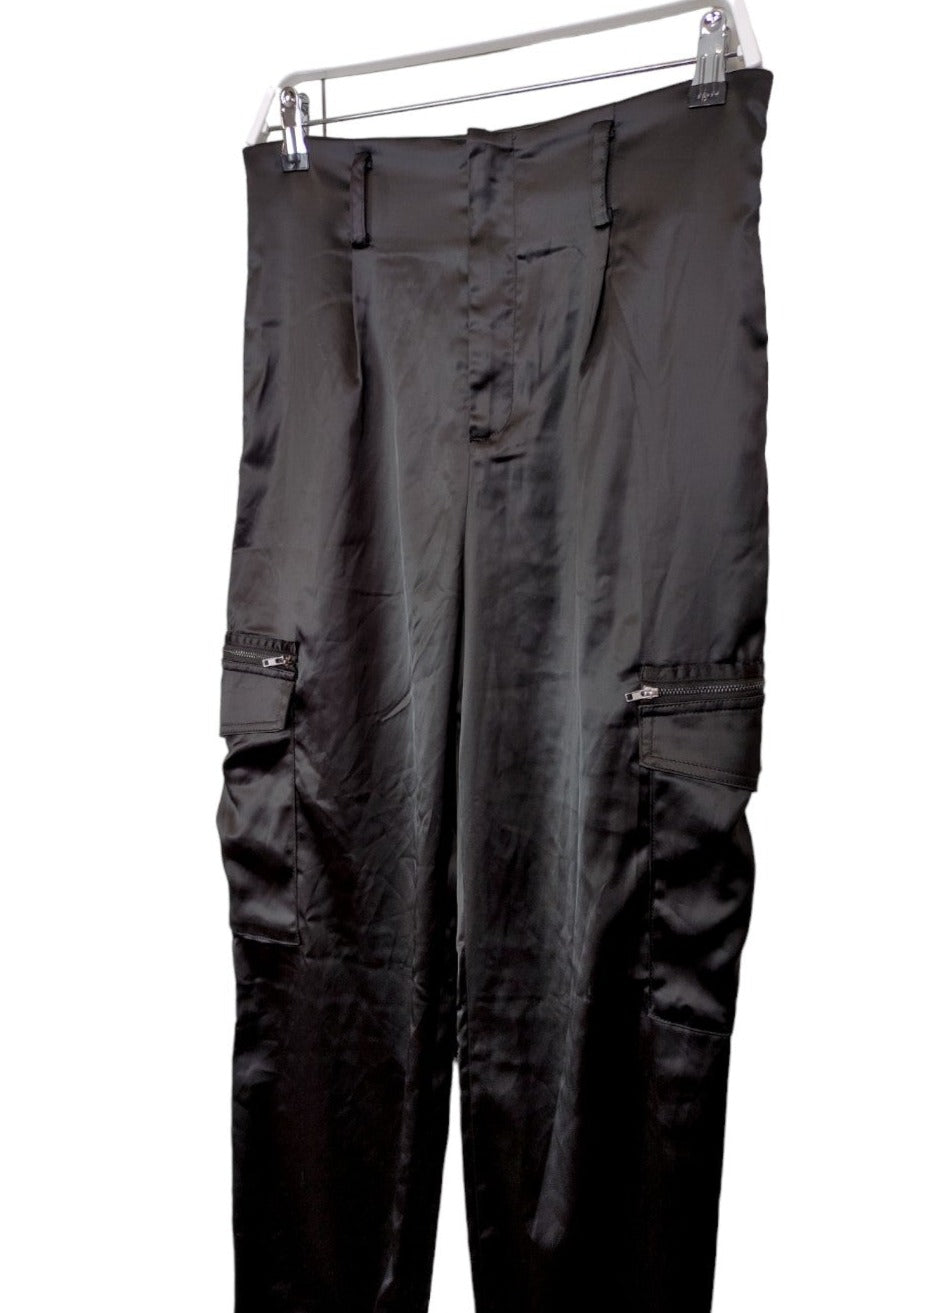 Stock, Cargo, Σατέν Γυναικείo Παντελόνι I SAW IT FIRST σε Μαύρο χρώμα (S/M)